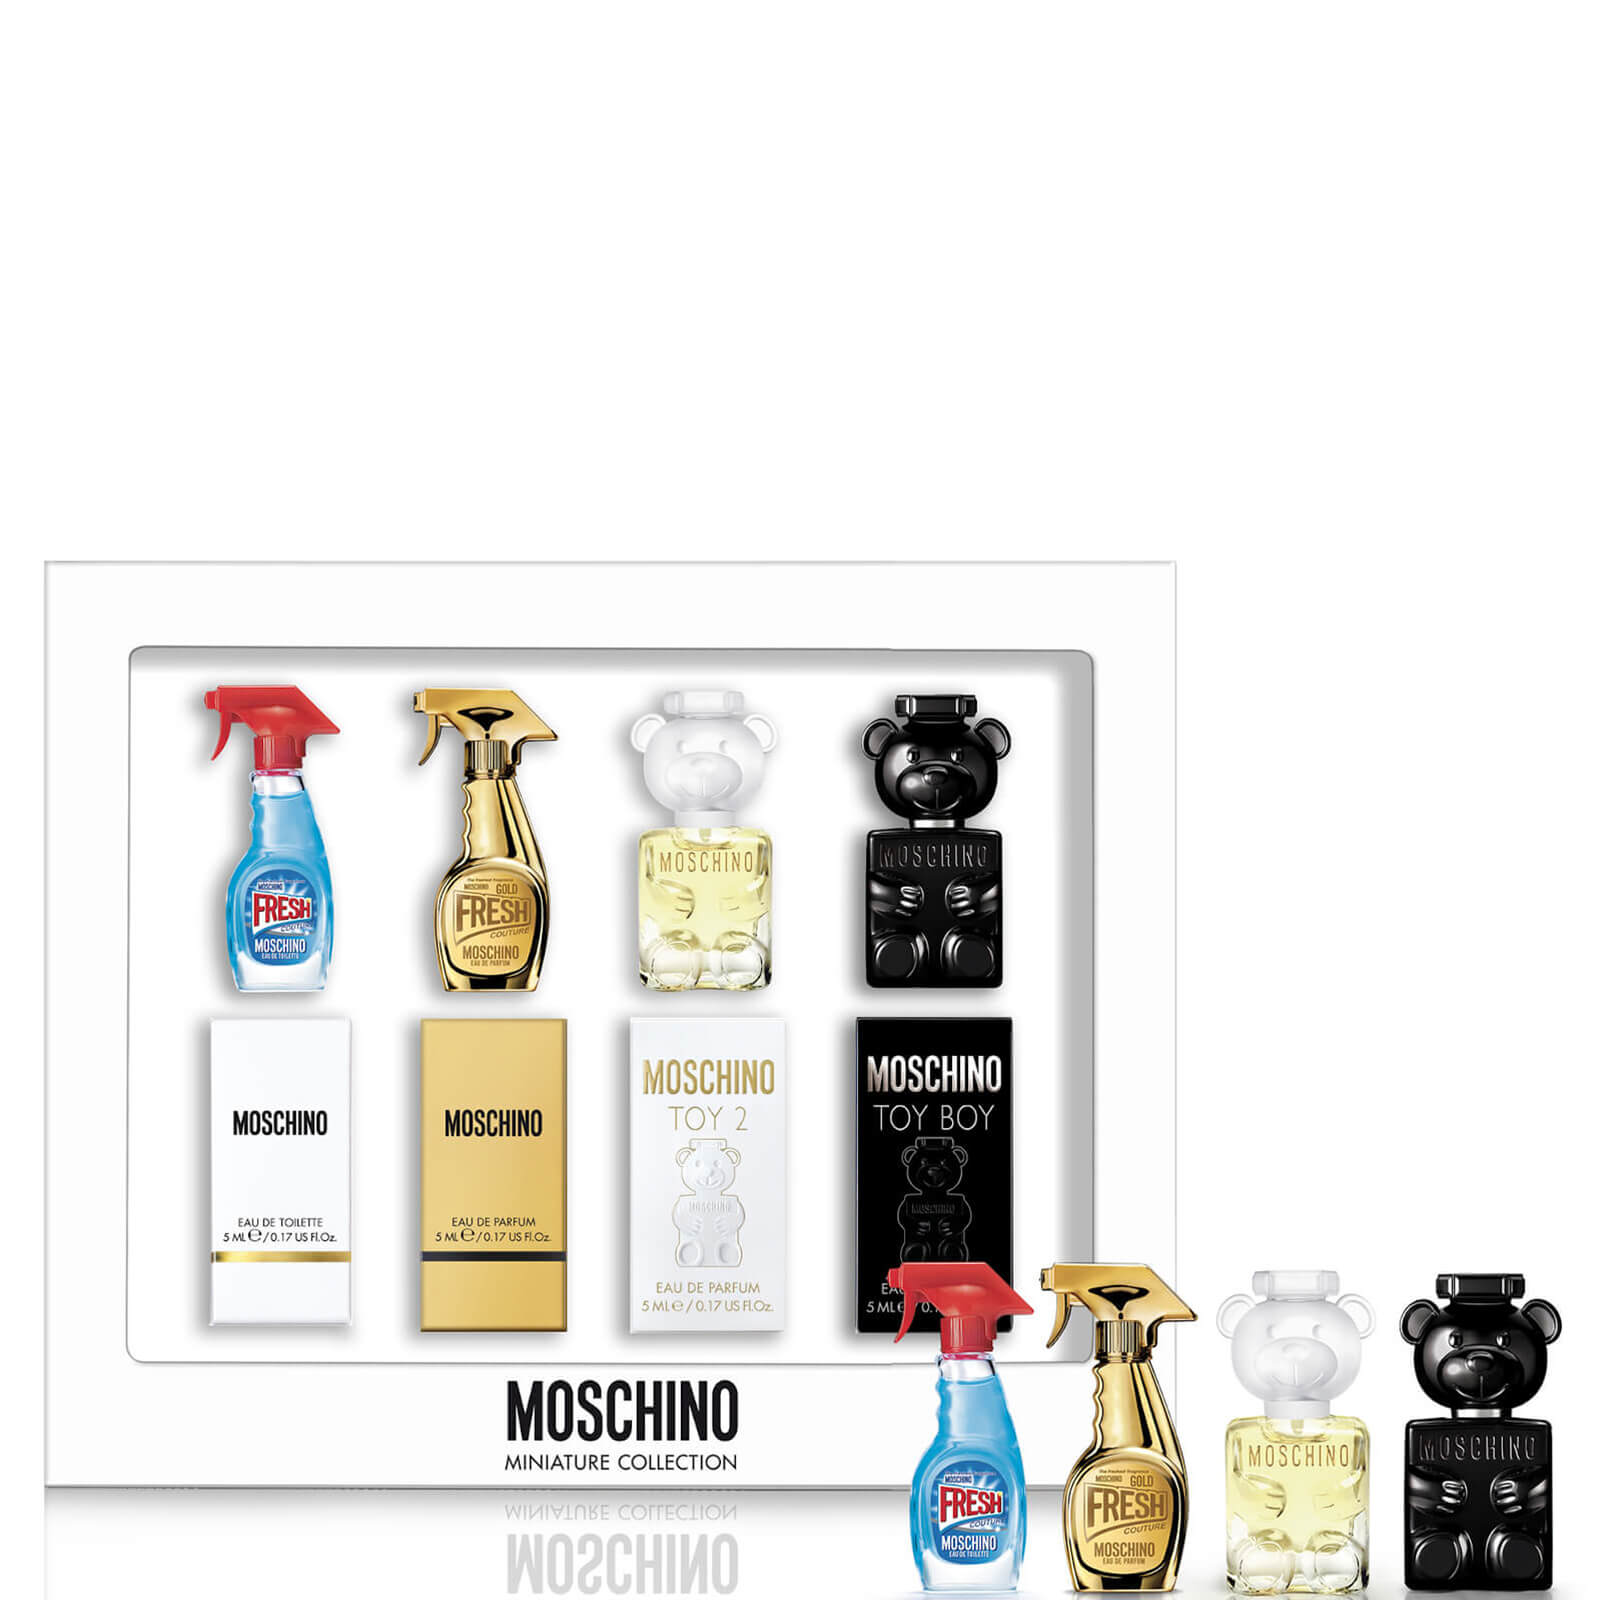 Moschino Mini parfume Set. Духи Москино 5 мл миниатюра. Набор миниатюр духов Moschino. Moschino Toy 2 миниатюра 5 мл. Набор духов москино